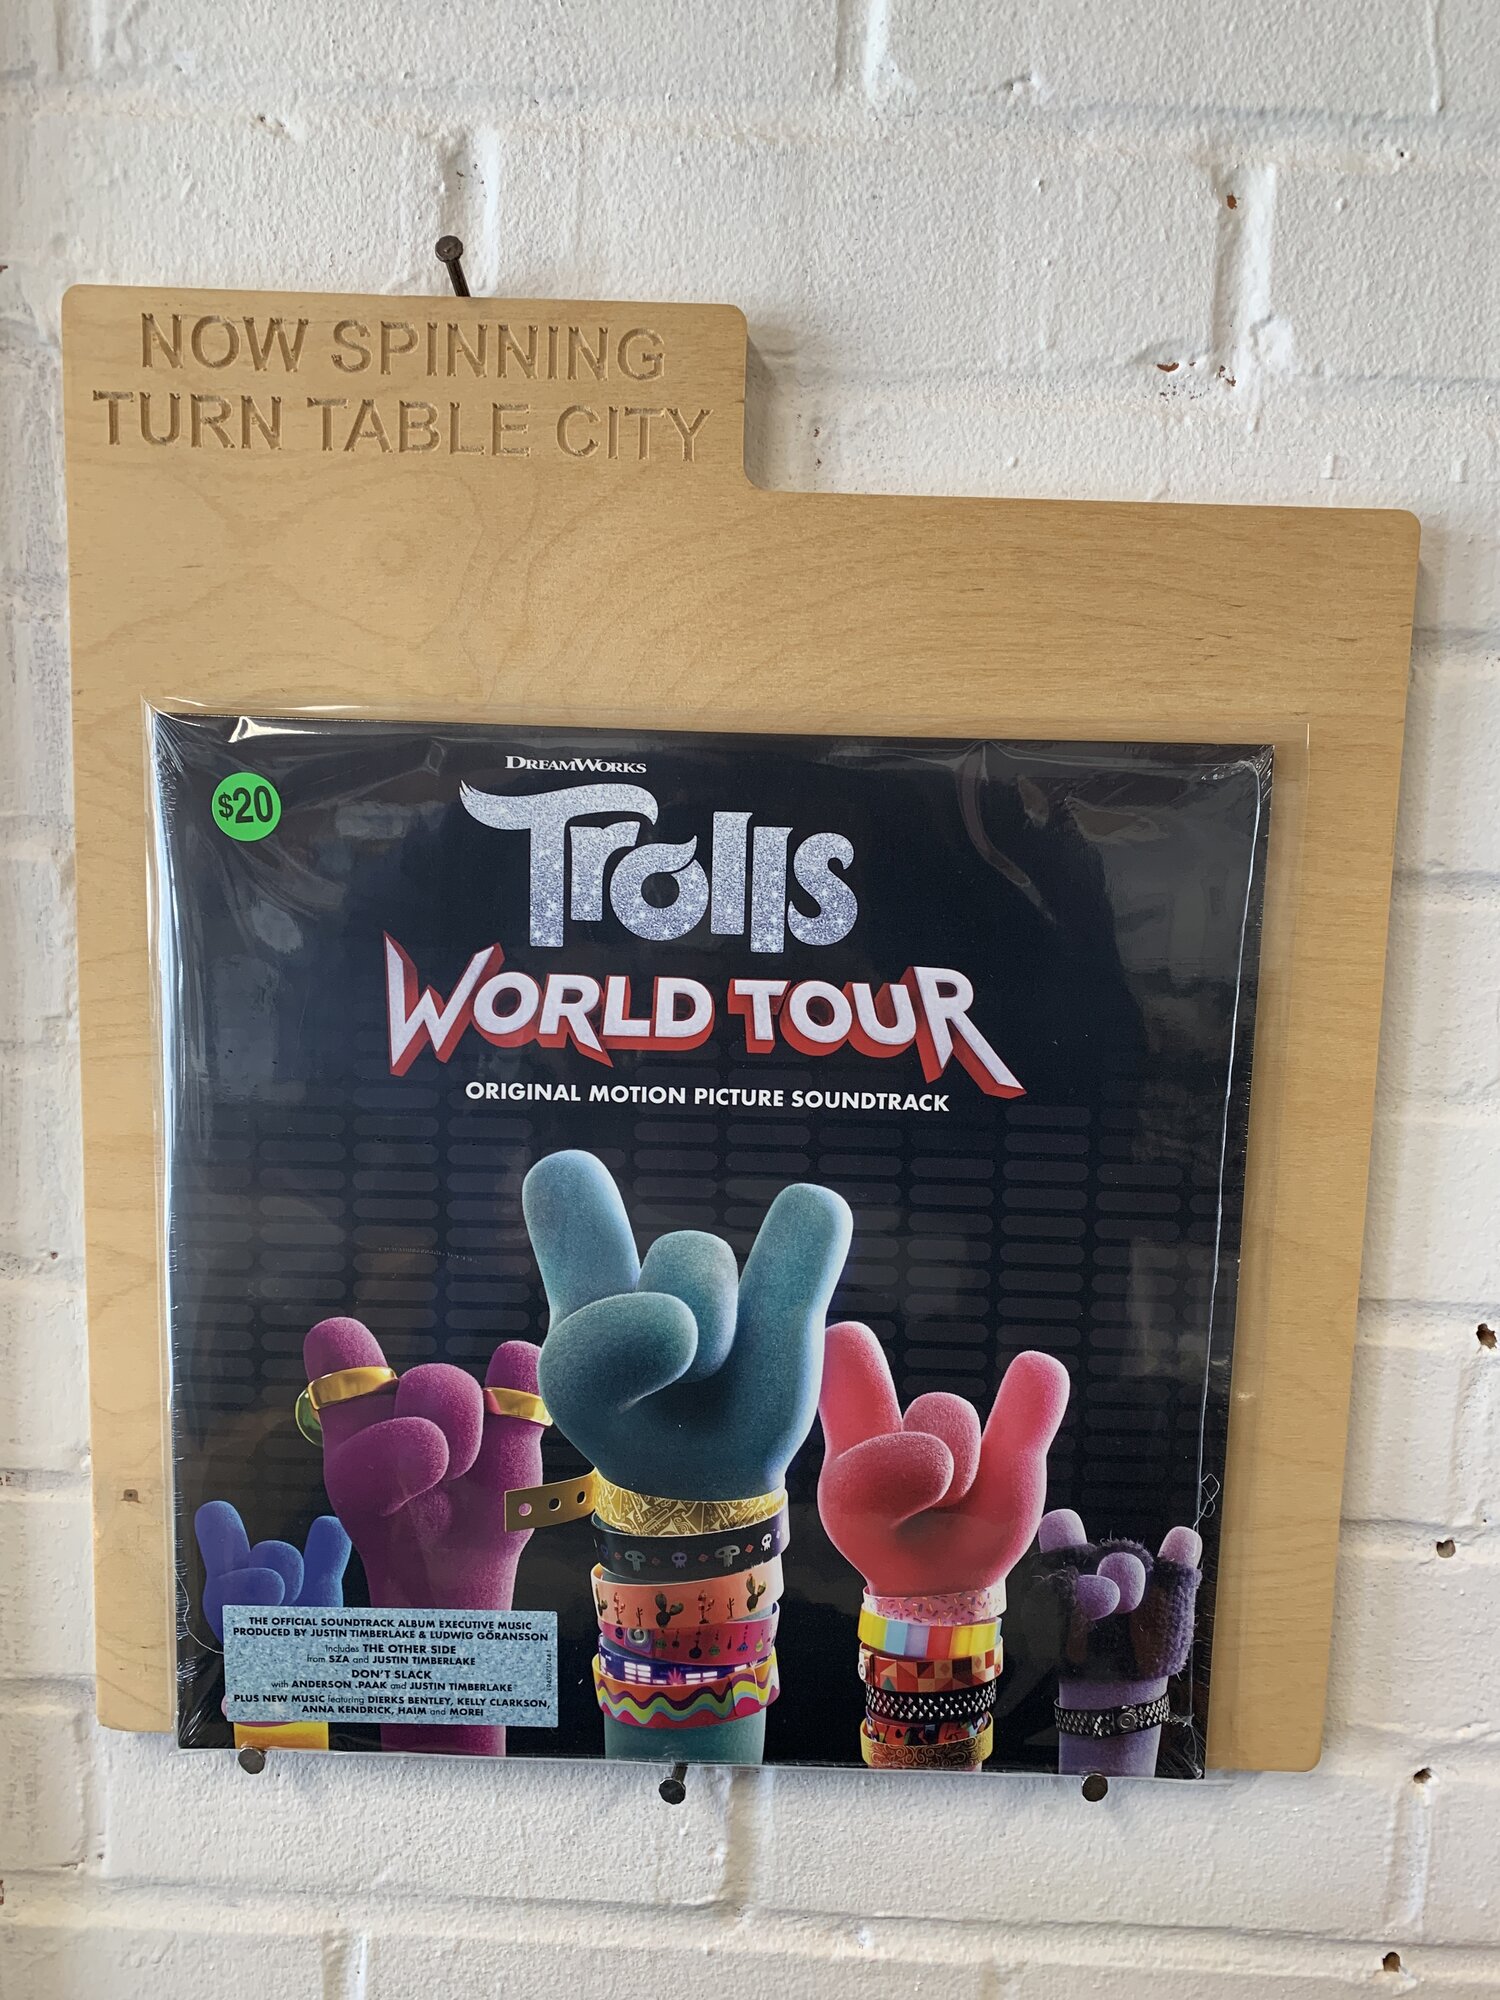 Trolls World Tour / O.S.T. - Trolls World Tour Soundtrack - CD 